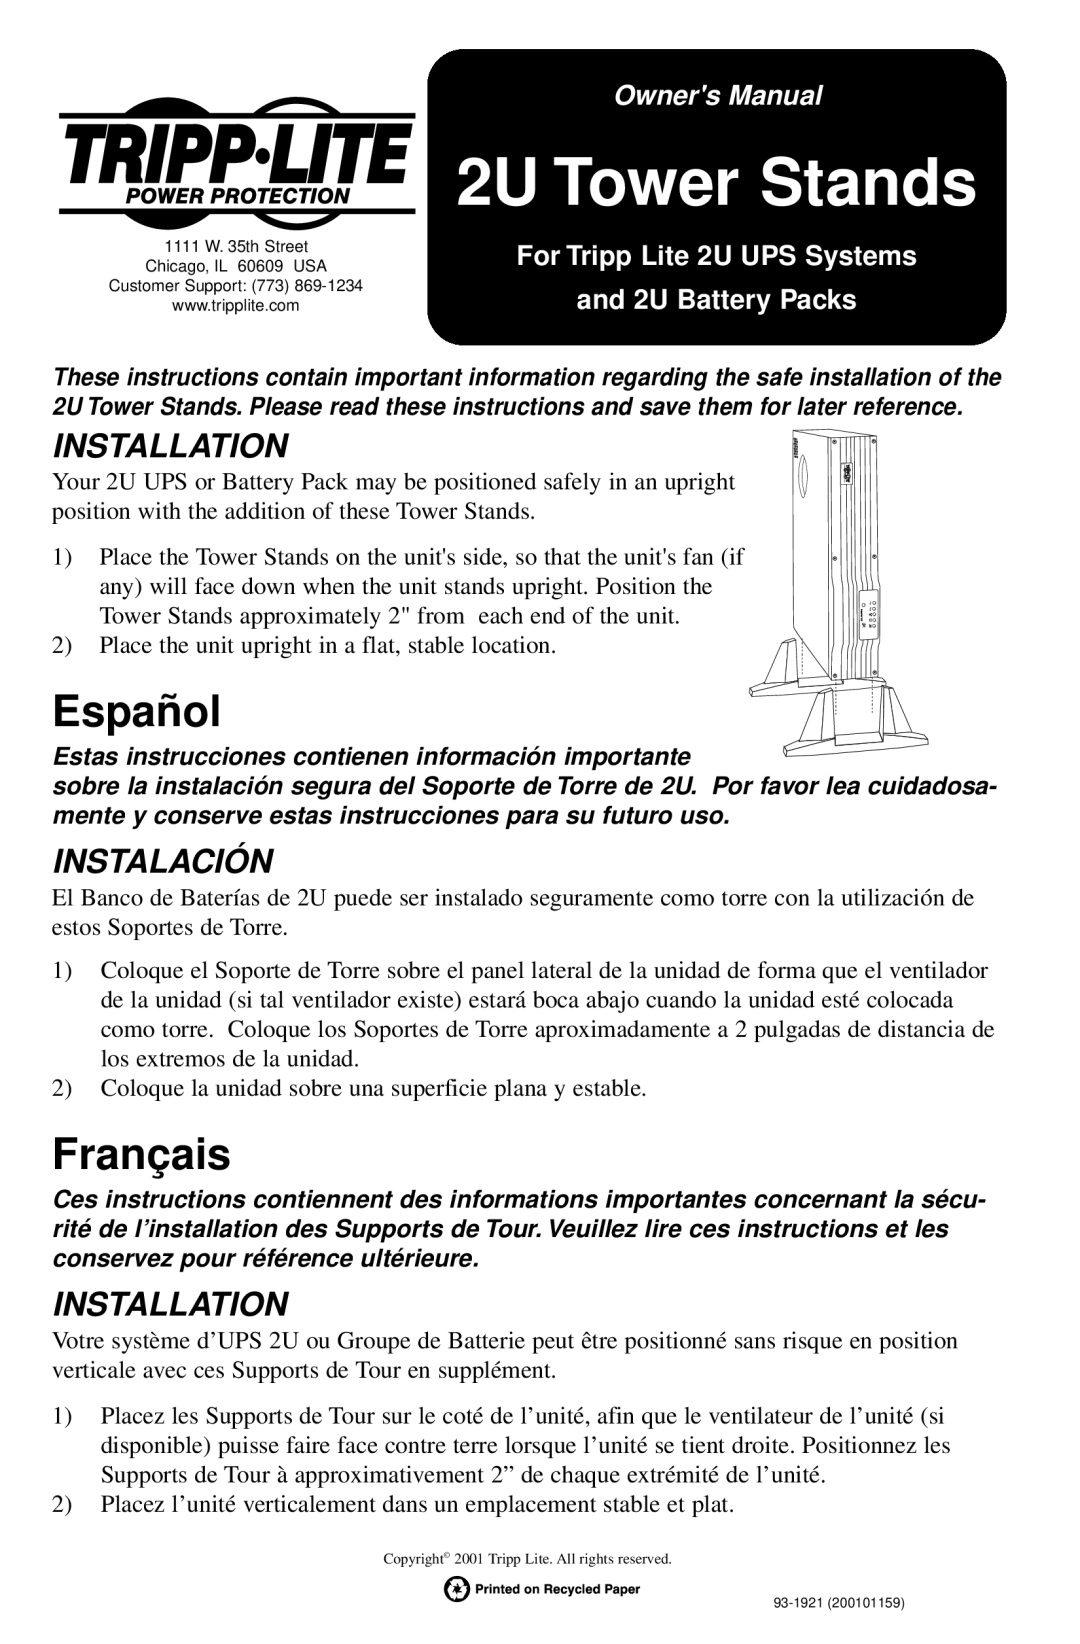 Tripp Lite owner manual 2U Tower Stands, Español, Français, Installation, Instalación 